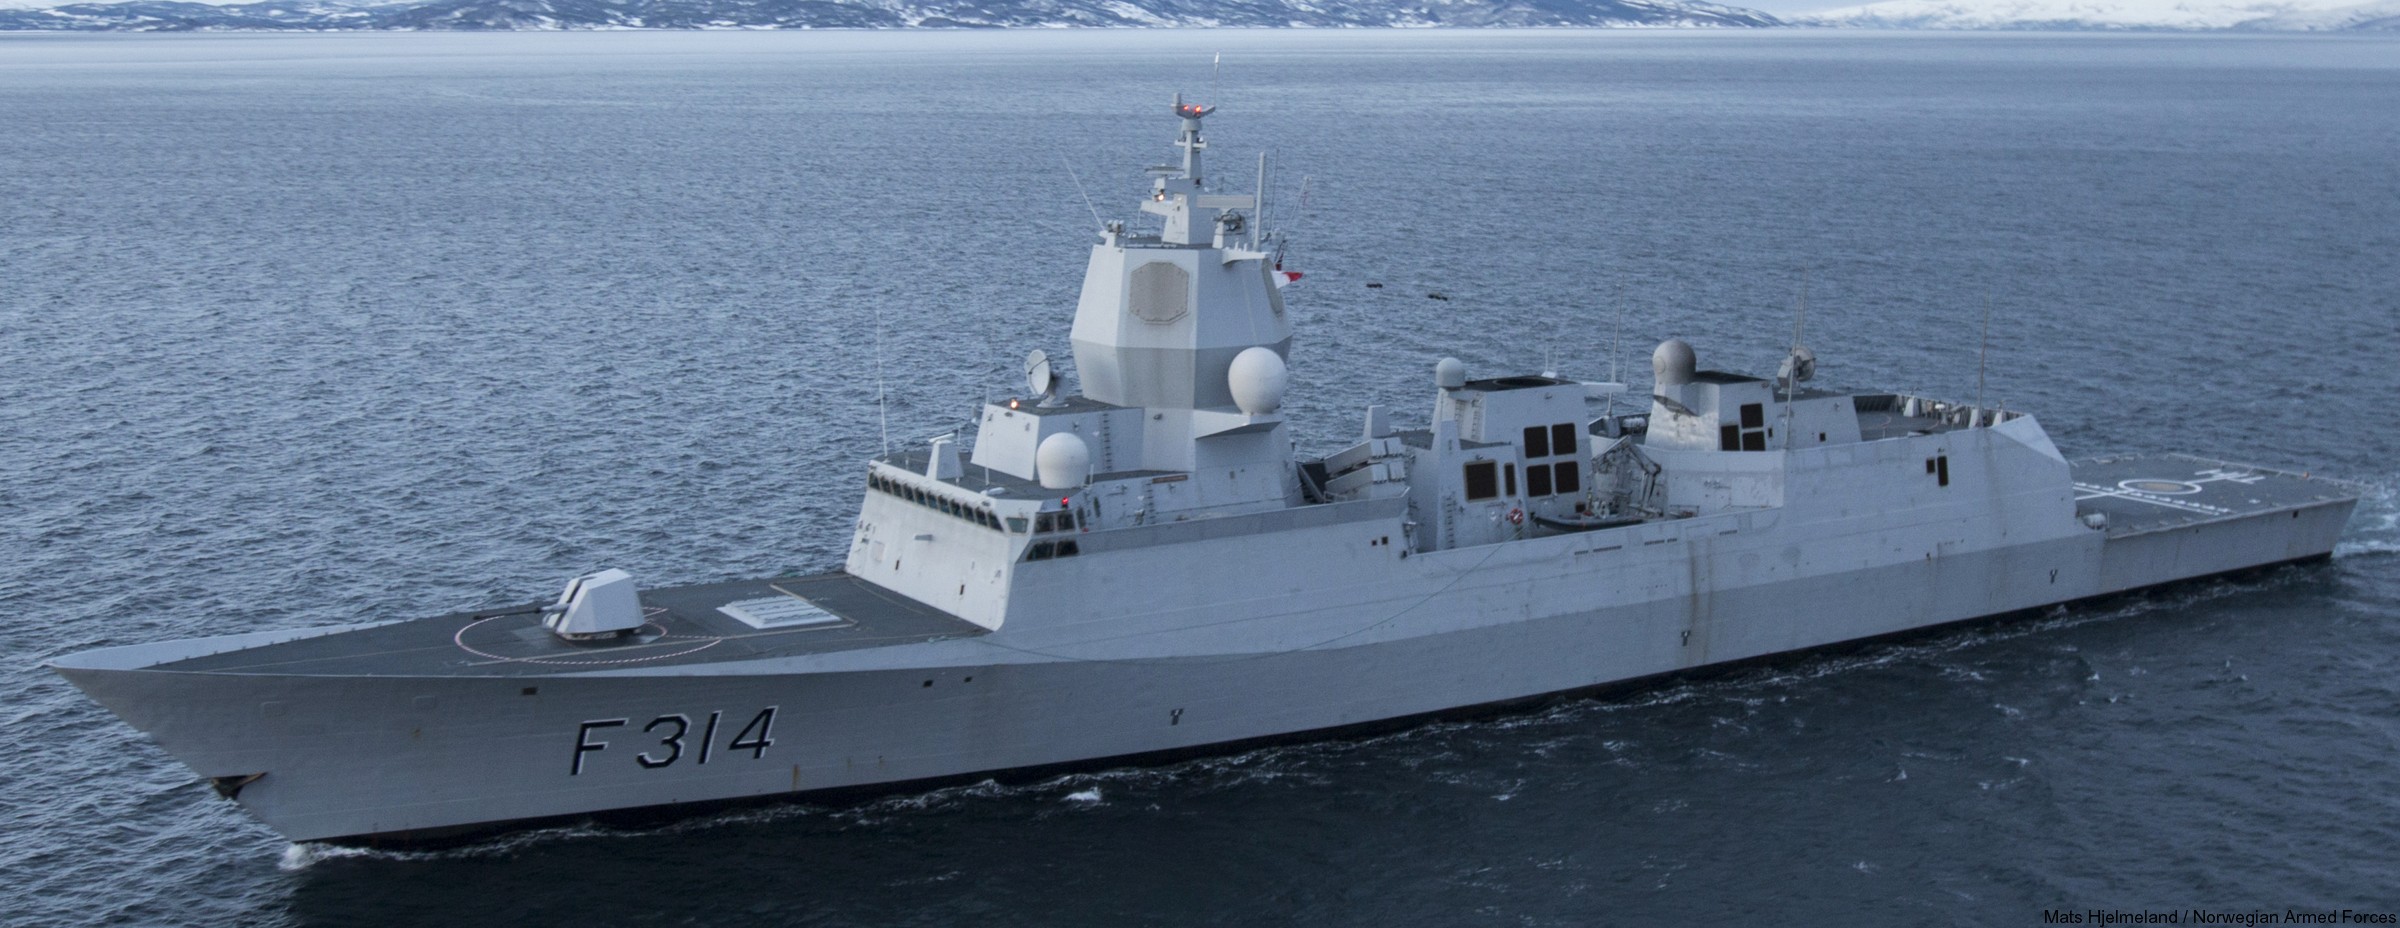 f-314 thor heyerdahl hnoms knm fridtjof nansen class frigate royal norwegian navy 33